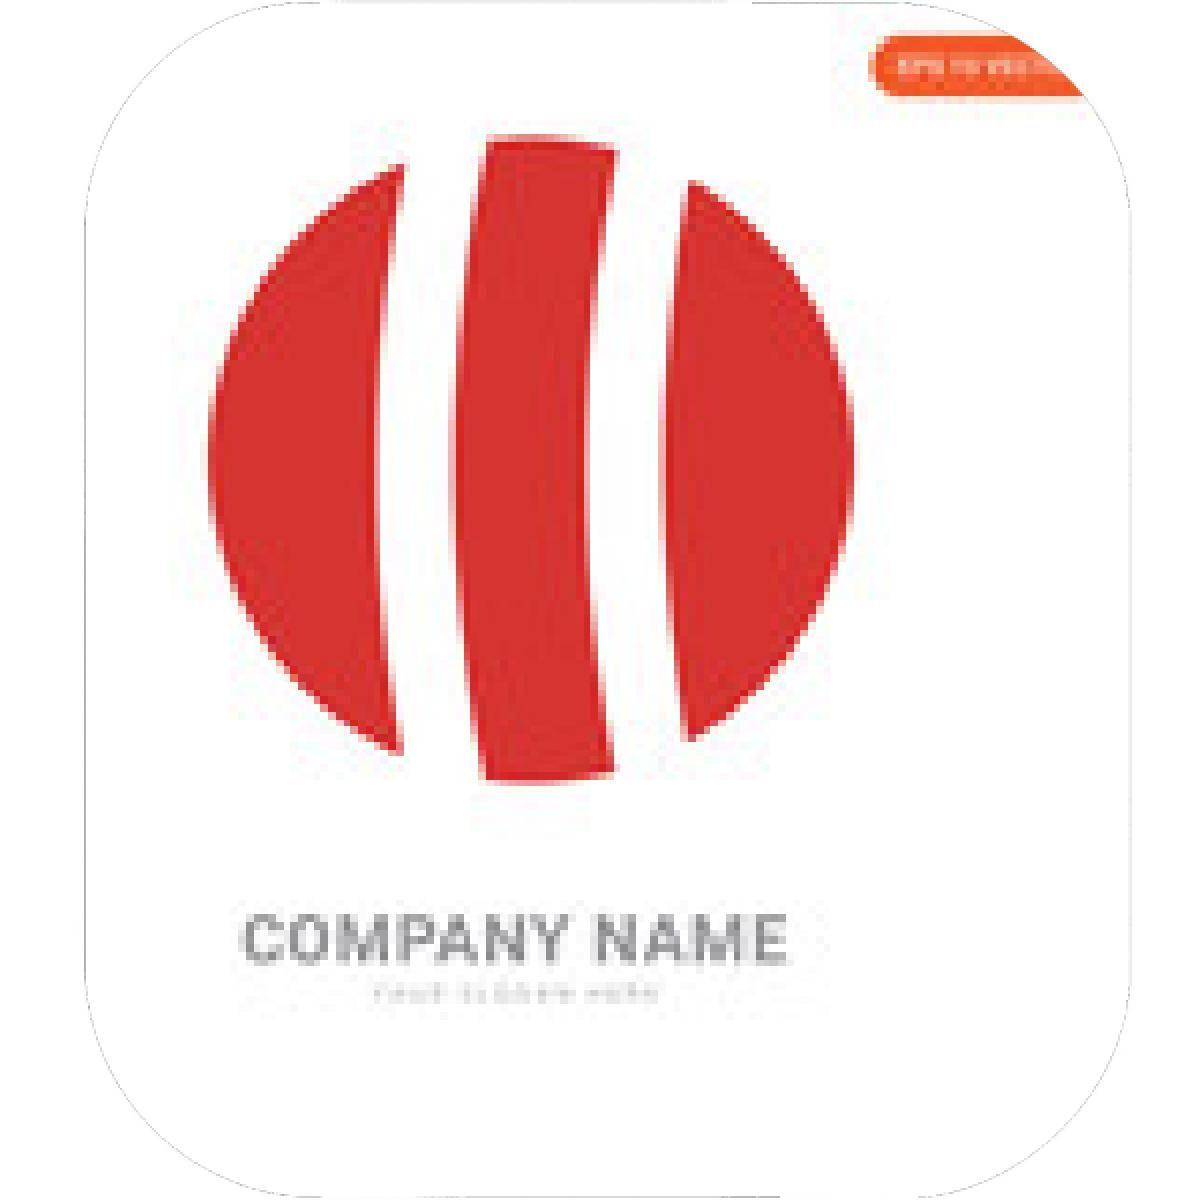 Red Ball Company Logo - Designs